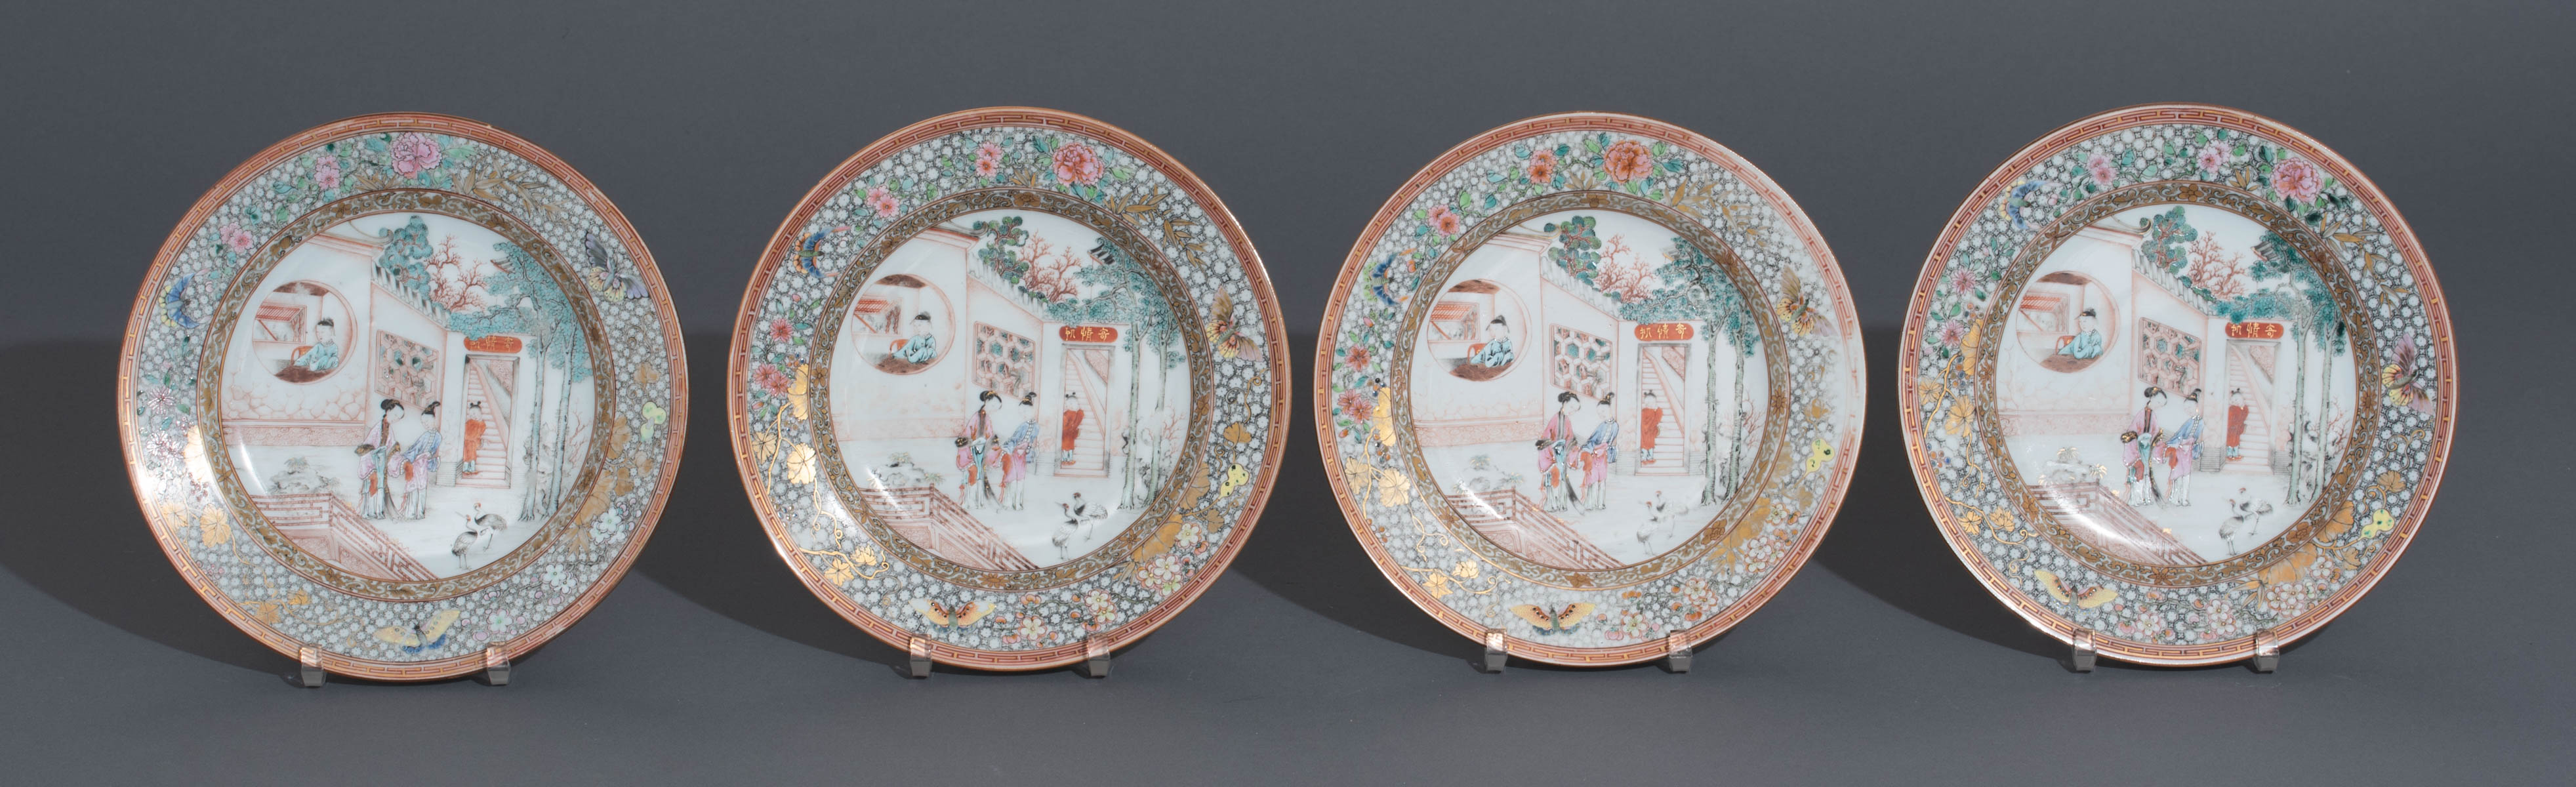 Nineteen famille rose export porcelain dishes - Image 4 of 11